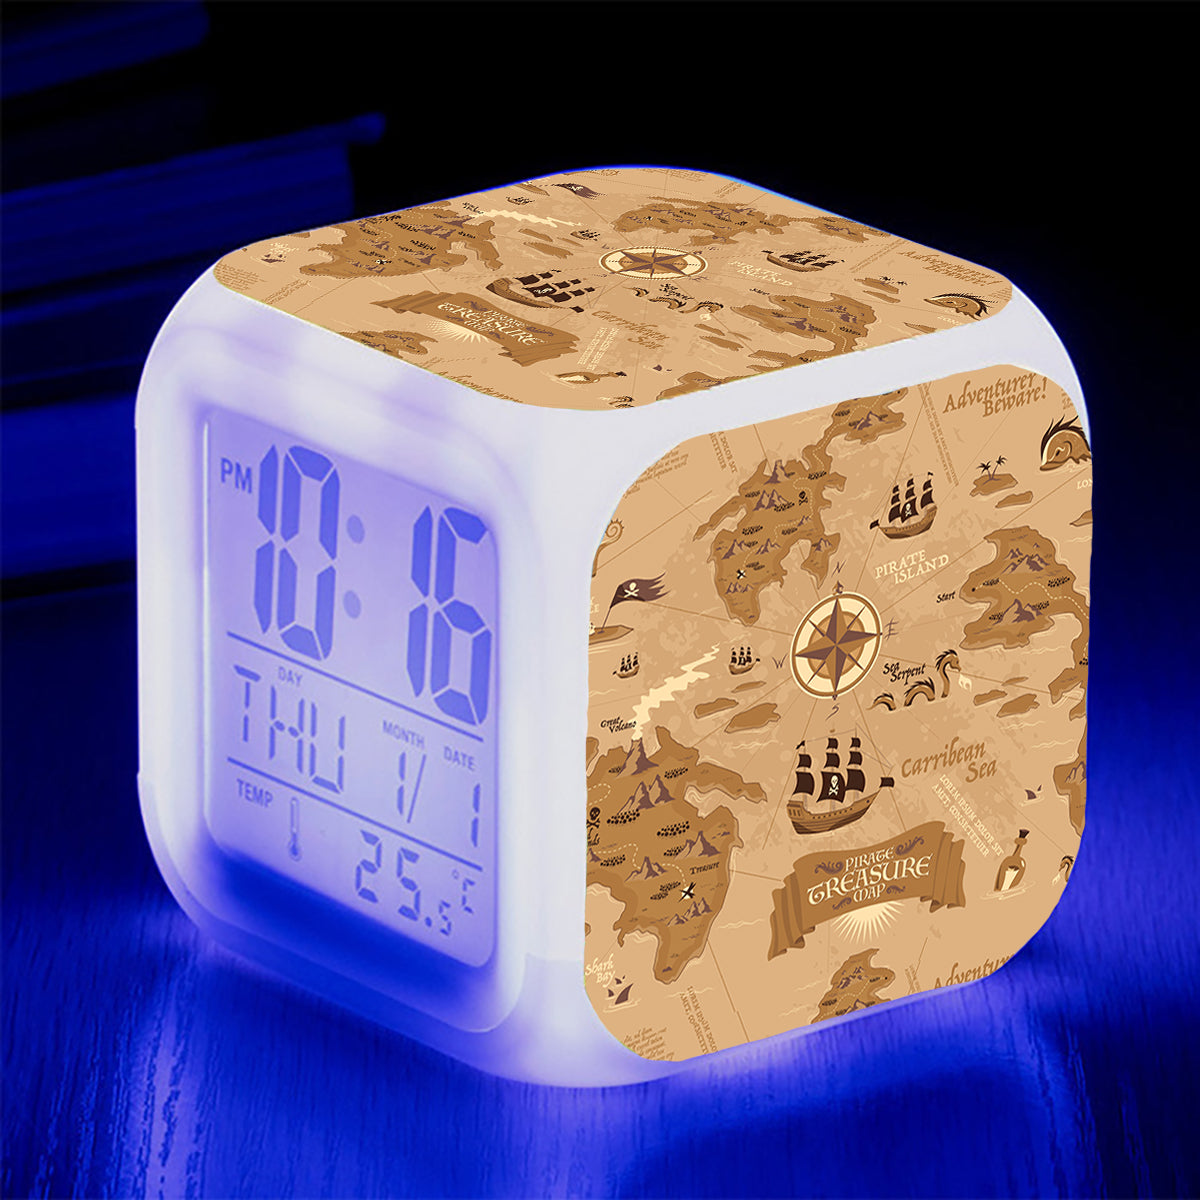 Adventurer Designed "7 Colour" Digital Alarm Clock